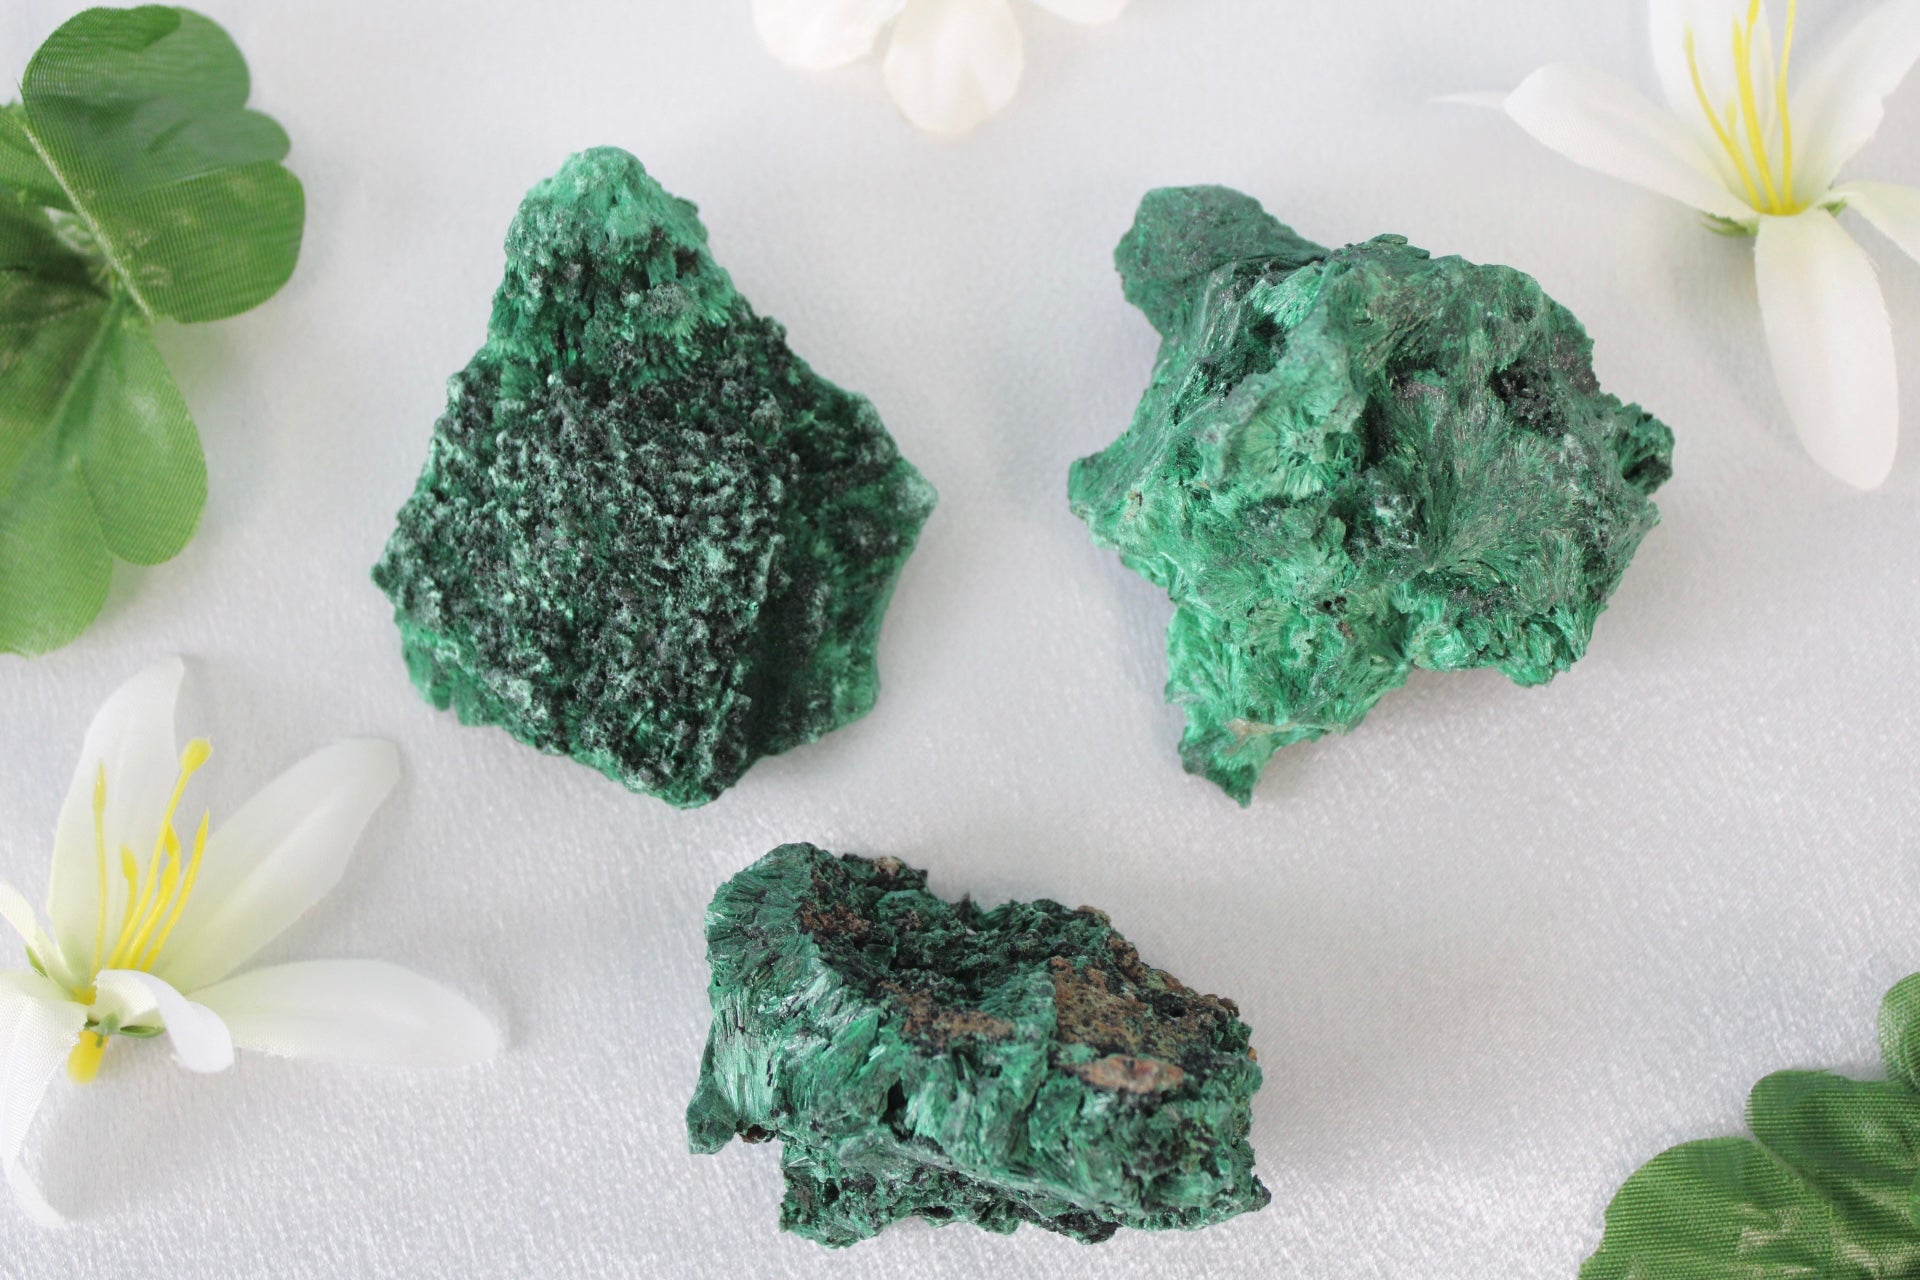 Malachite Crystal Mineral Specimen RAW